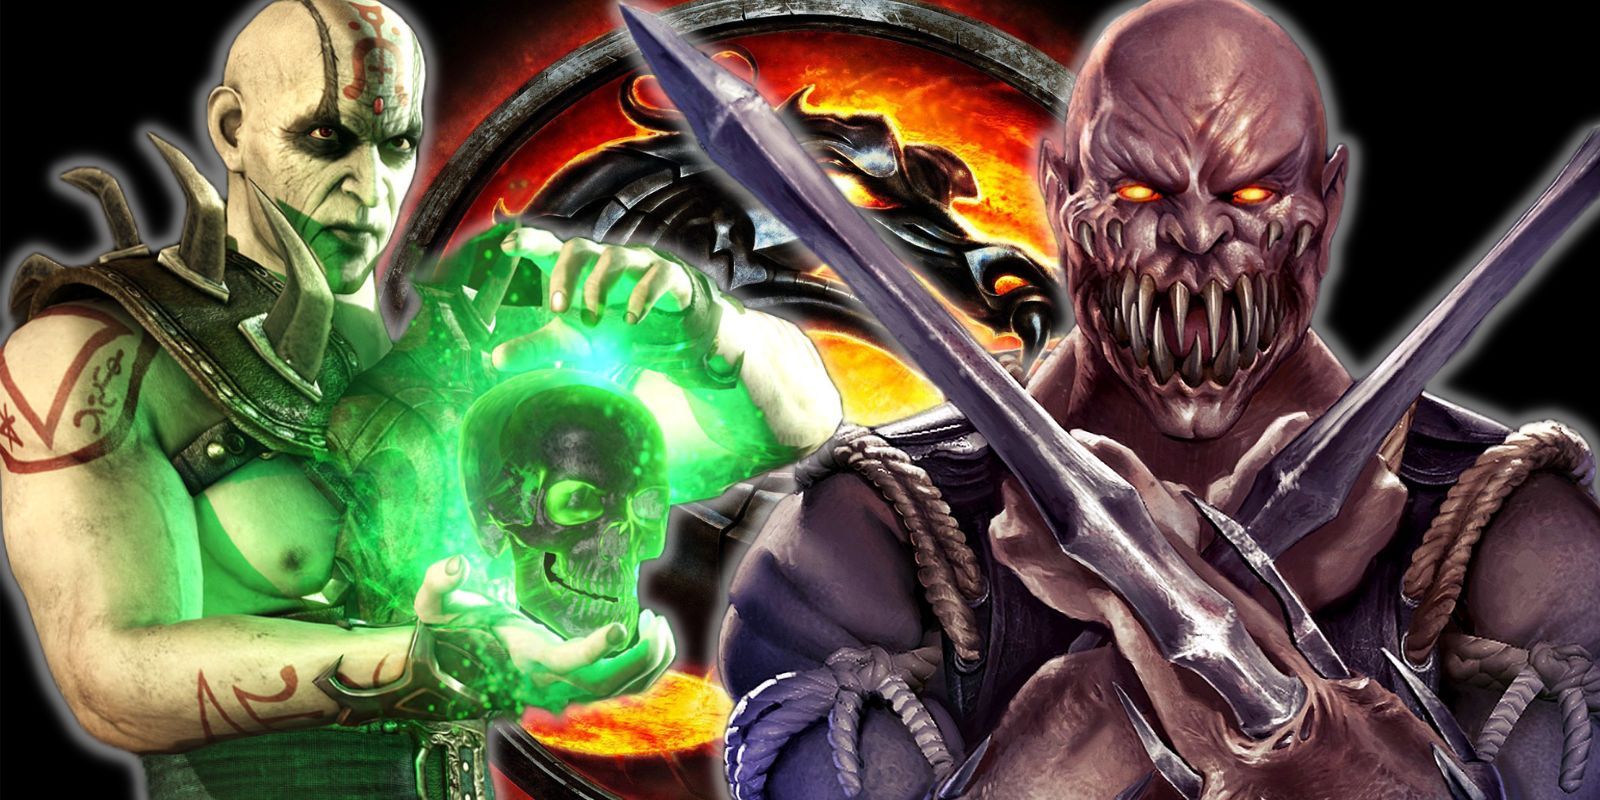 Quan-Chi and Baraka in front of a fiery Mortal Kombat logo